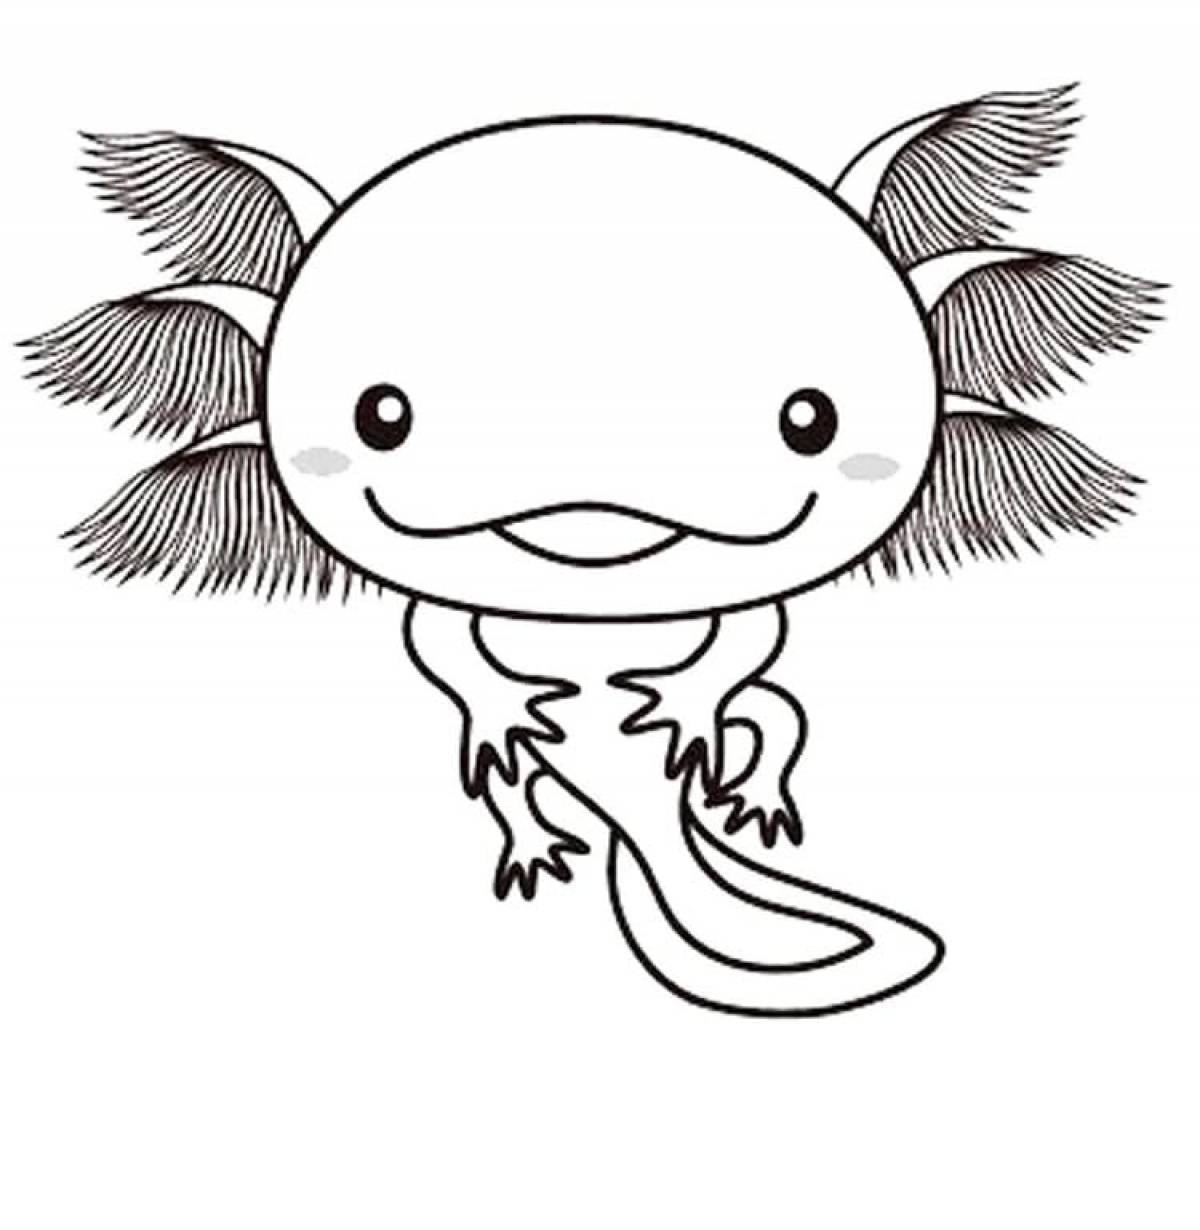 Cute axolotl coloring book